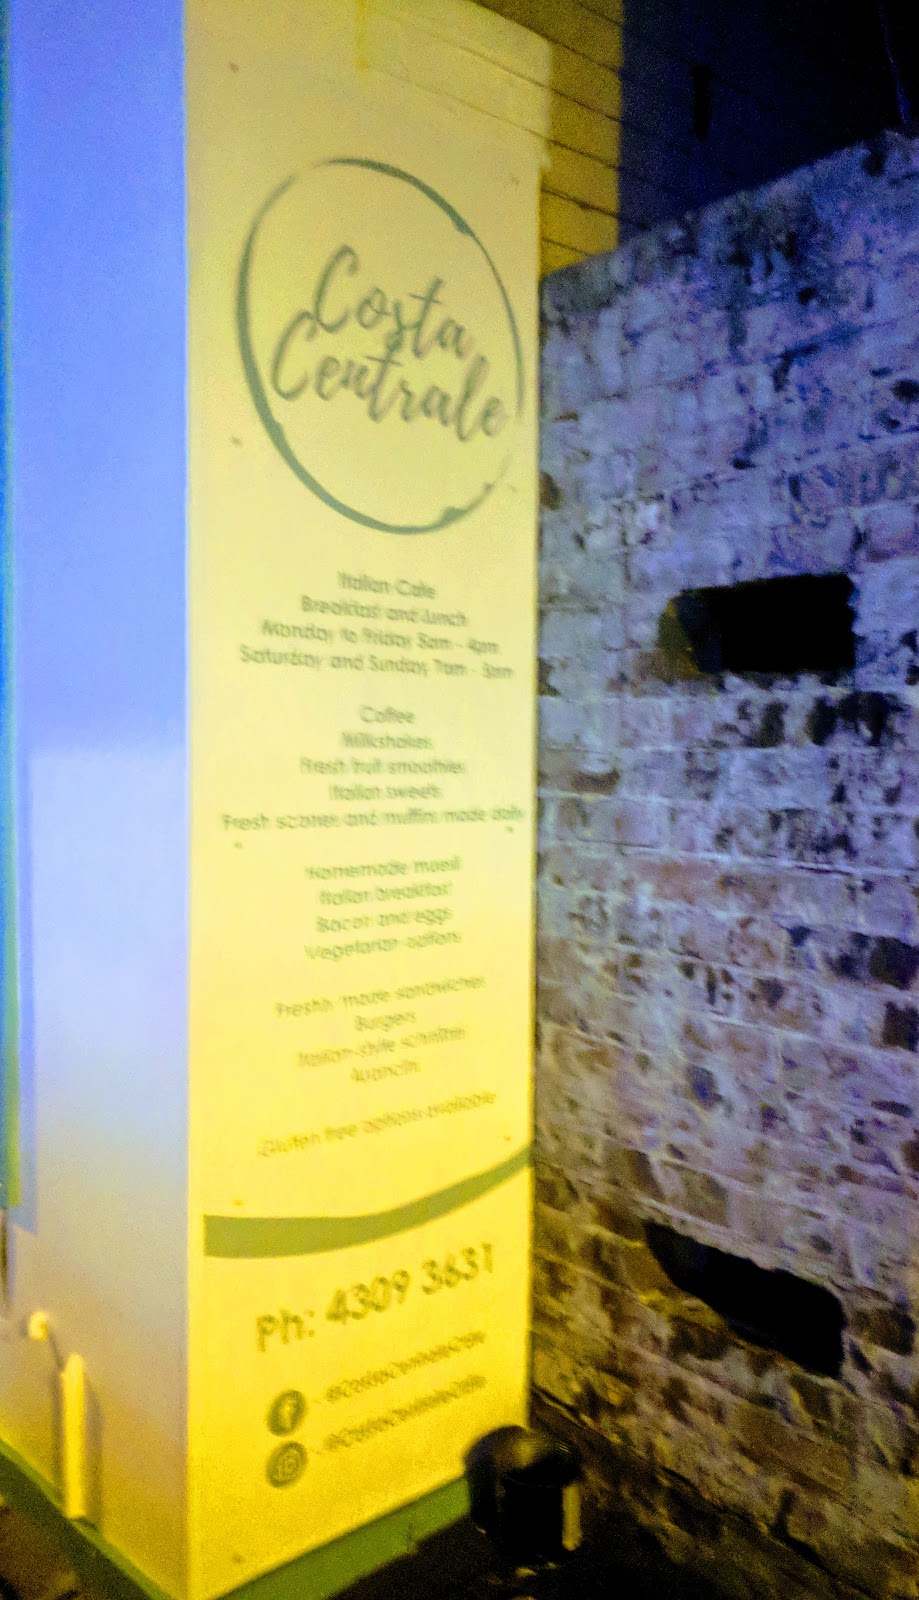 Costa Centrale Cafe | cafe | 4/18/22 The Boulevarde, Woy Woy NSW 2256, Australia | 0243093631 OR +61 2 4309 3631